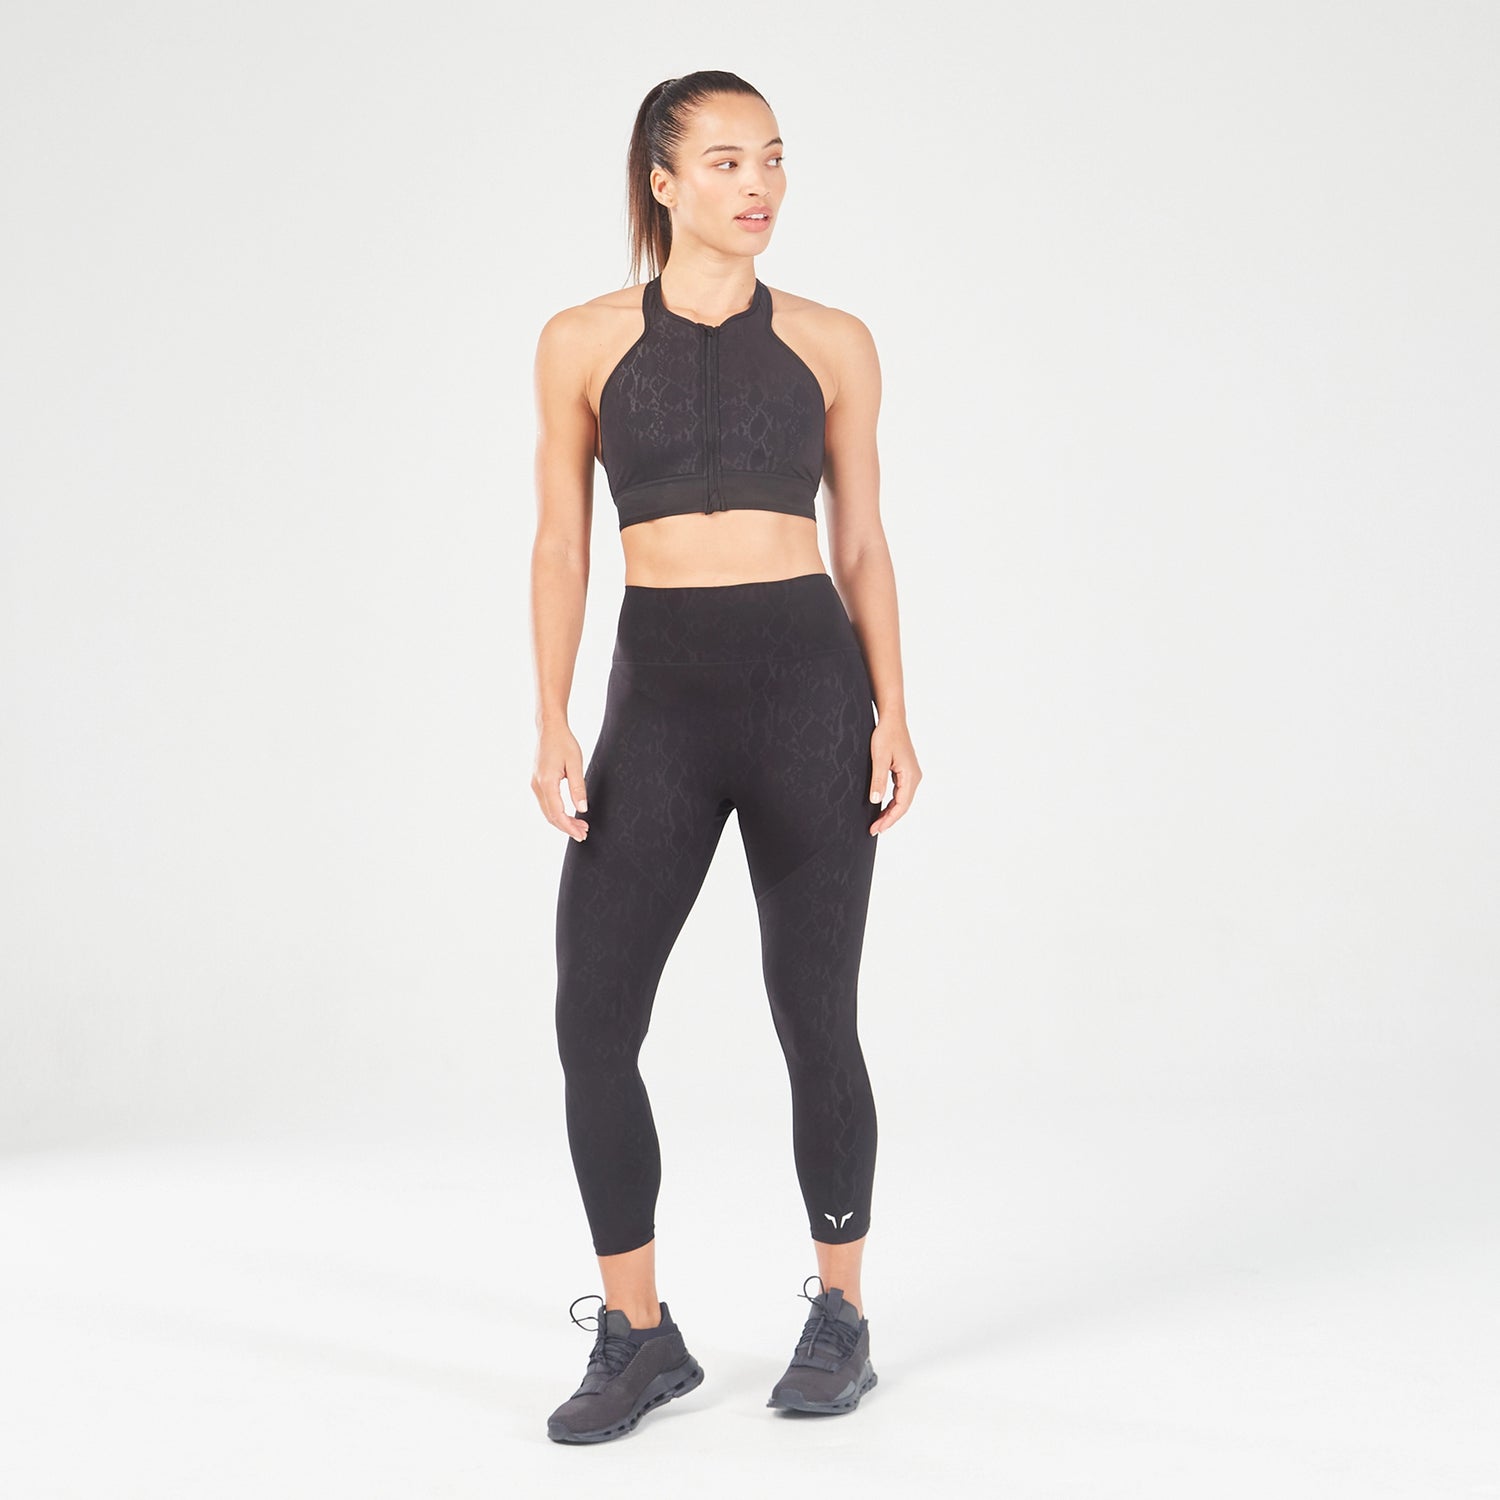 squatwolf-workout-clothes-serpent-7-8-leggings-black-gym-leggings-for-women